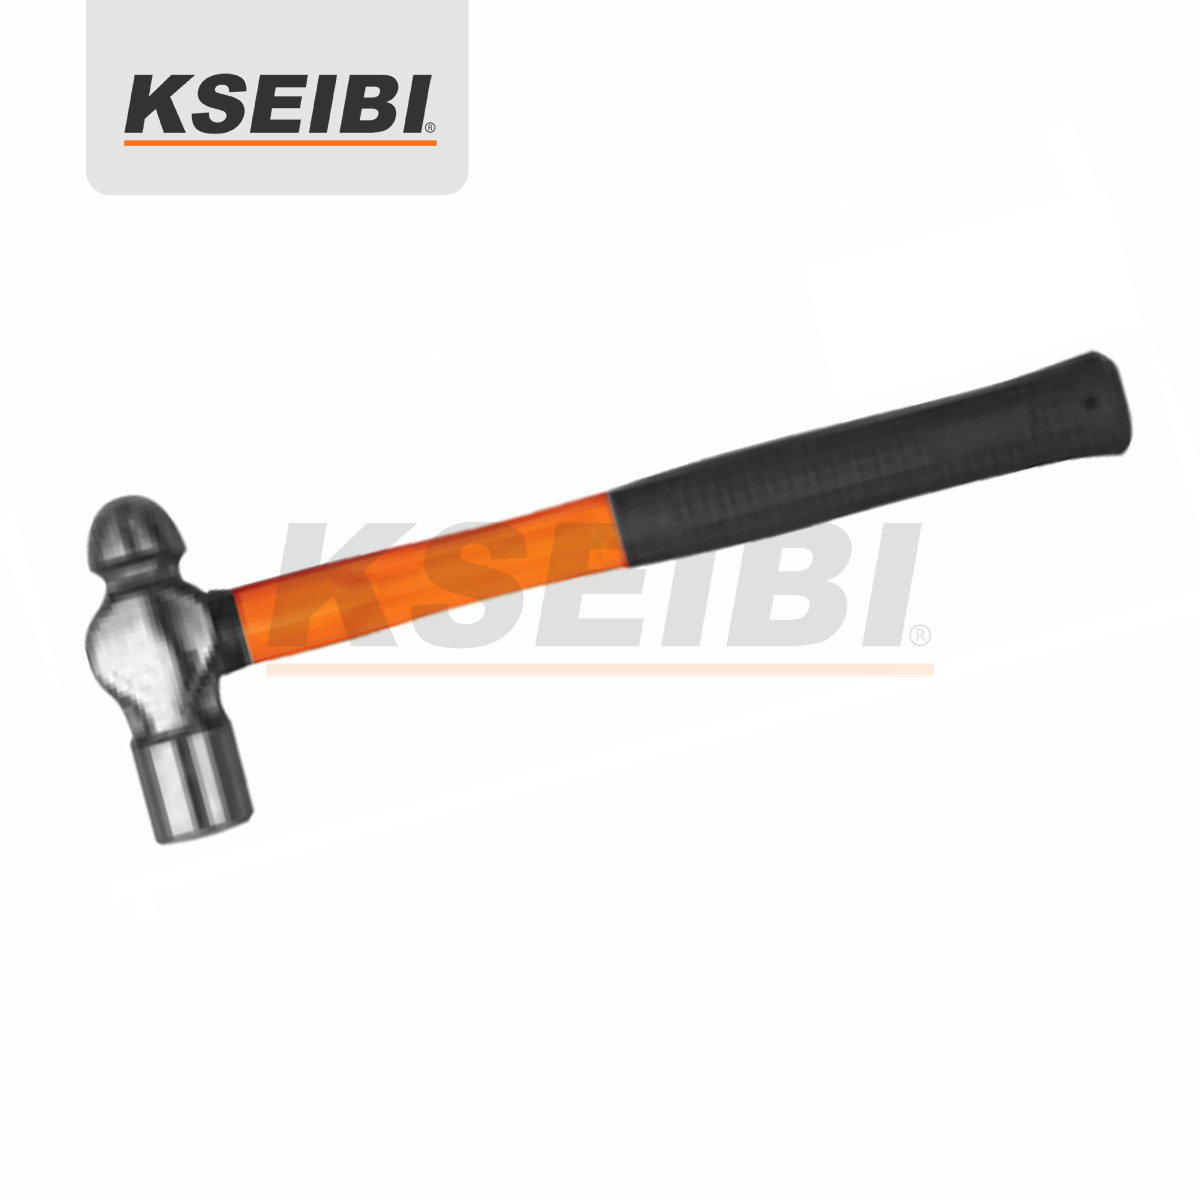 Kseibi Ball Pein Hammer with Fiberglass Handle